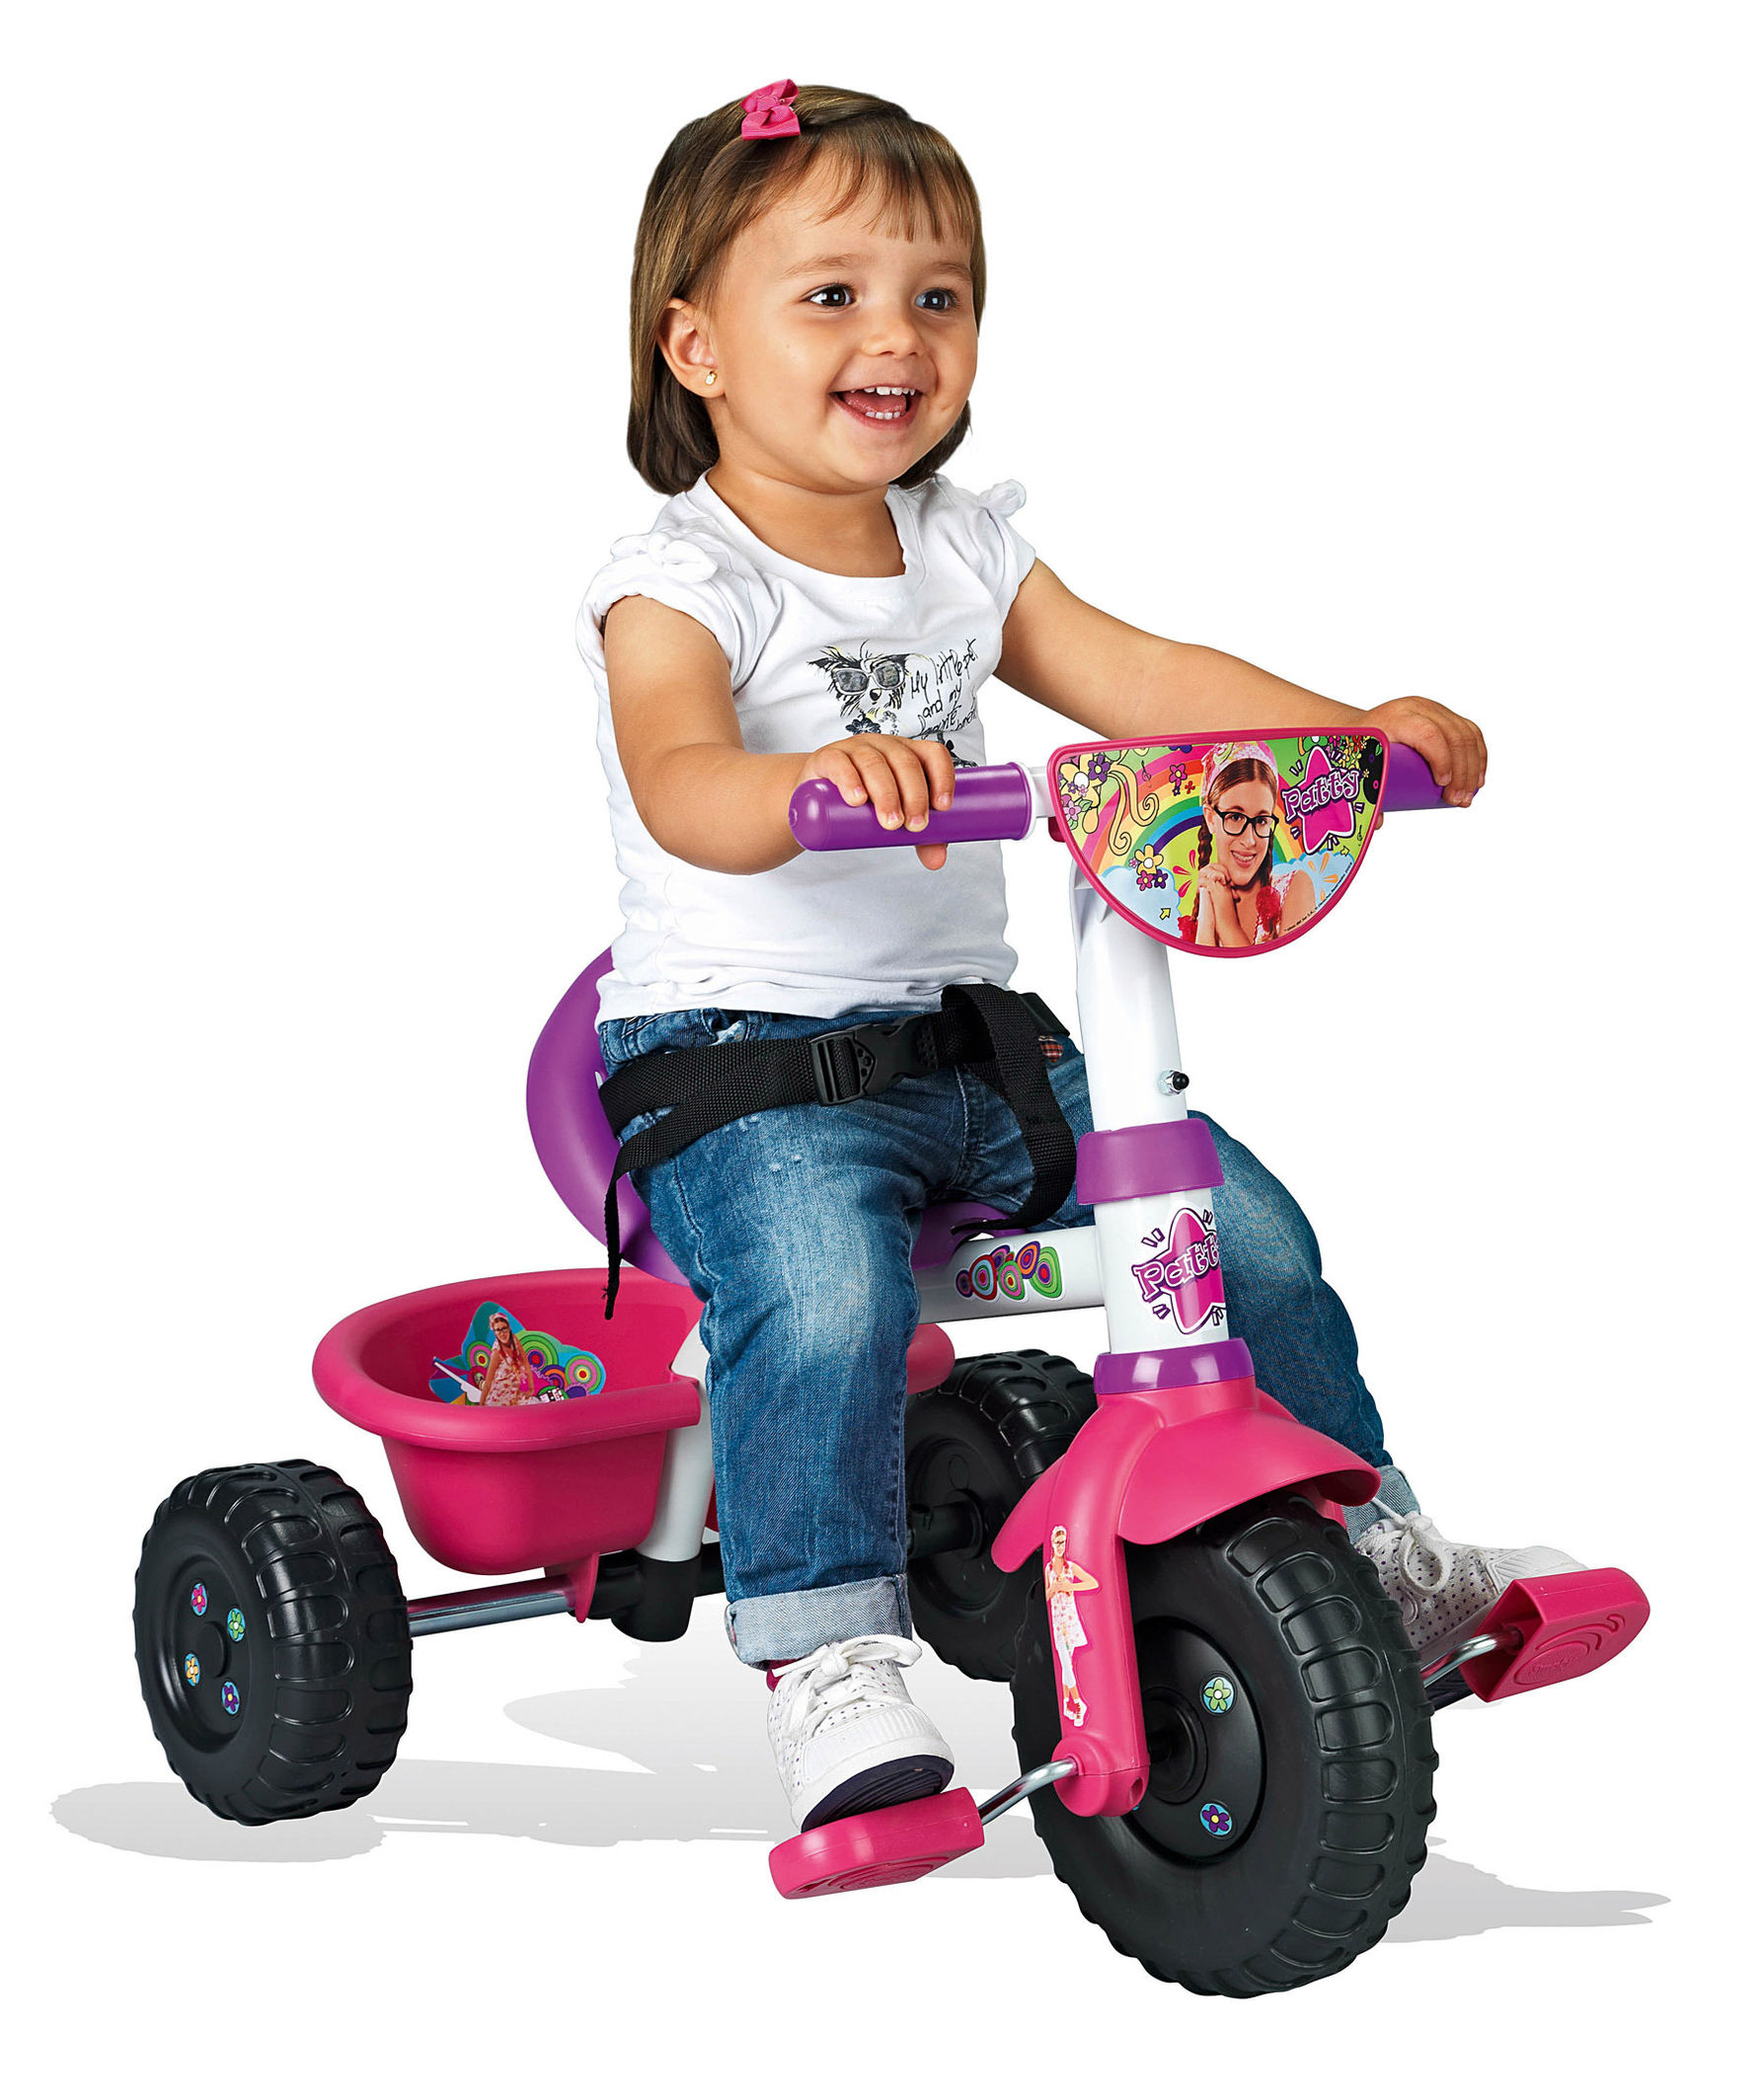 Smoby Be Fun Dreirad mit Schubstange Farbe: lila pink | Kinderfahrzeuge